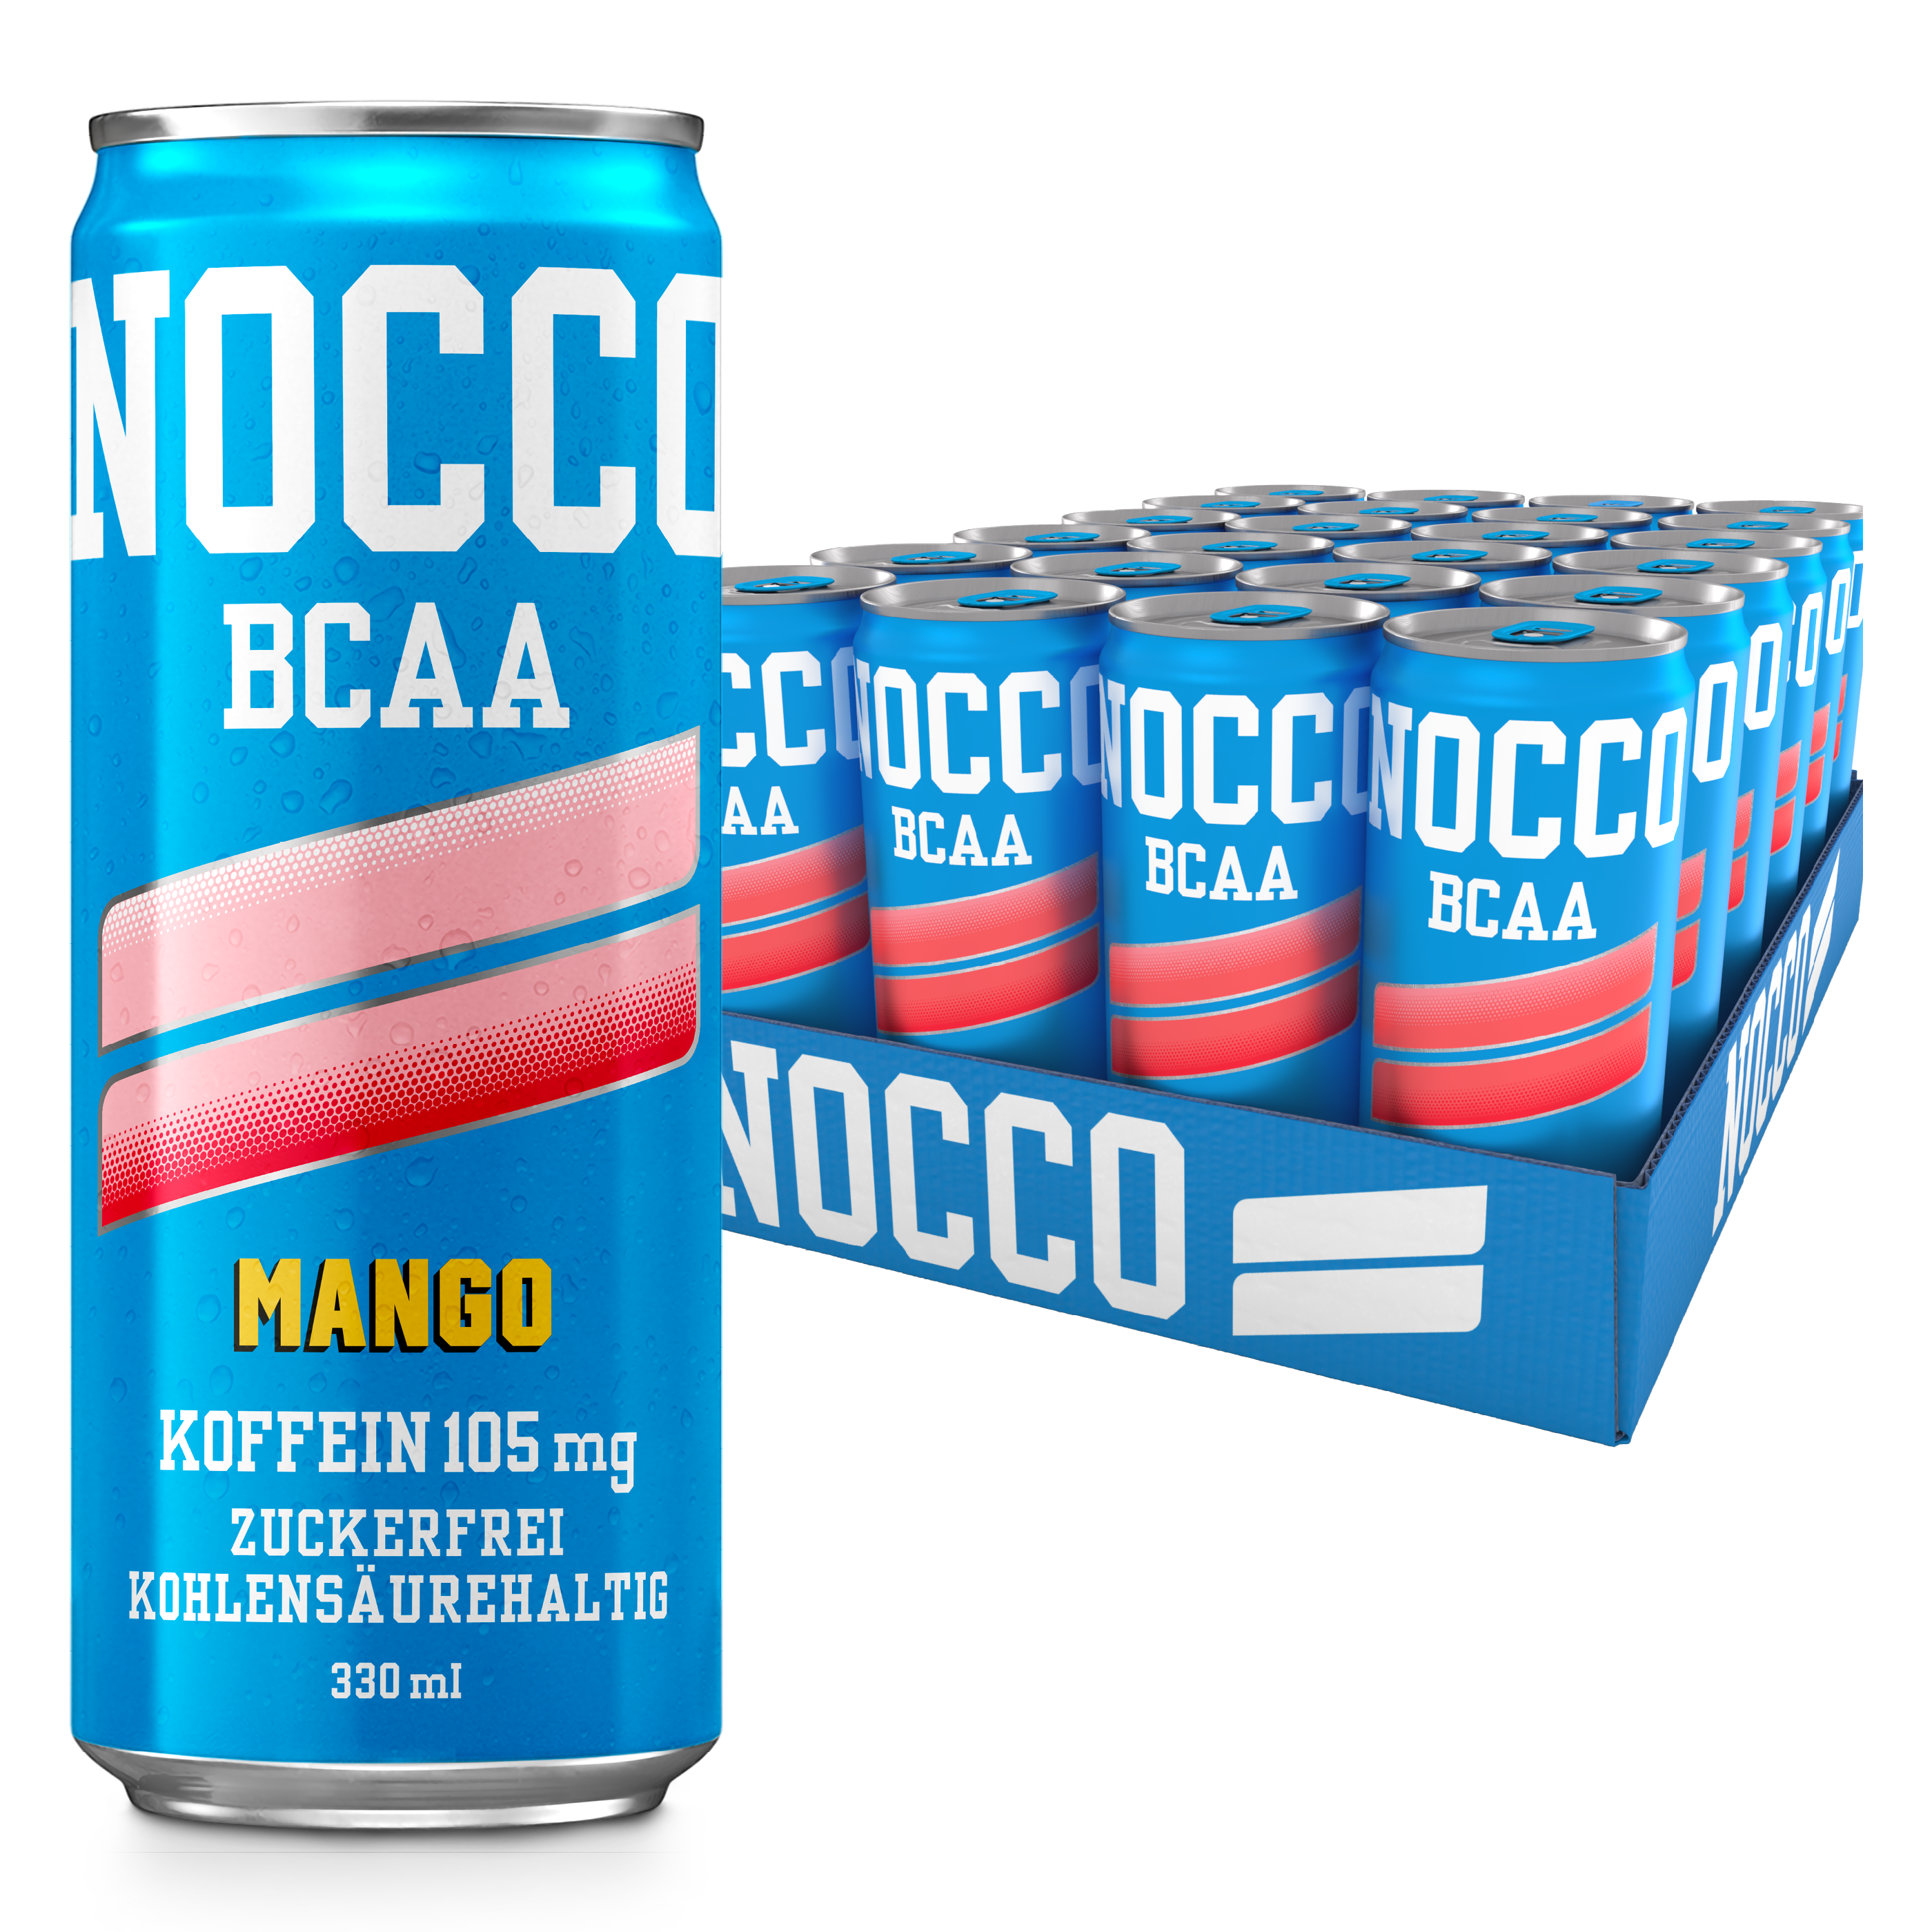 Nocco Mango 24-pack